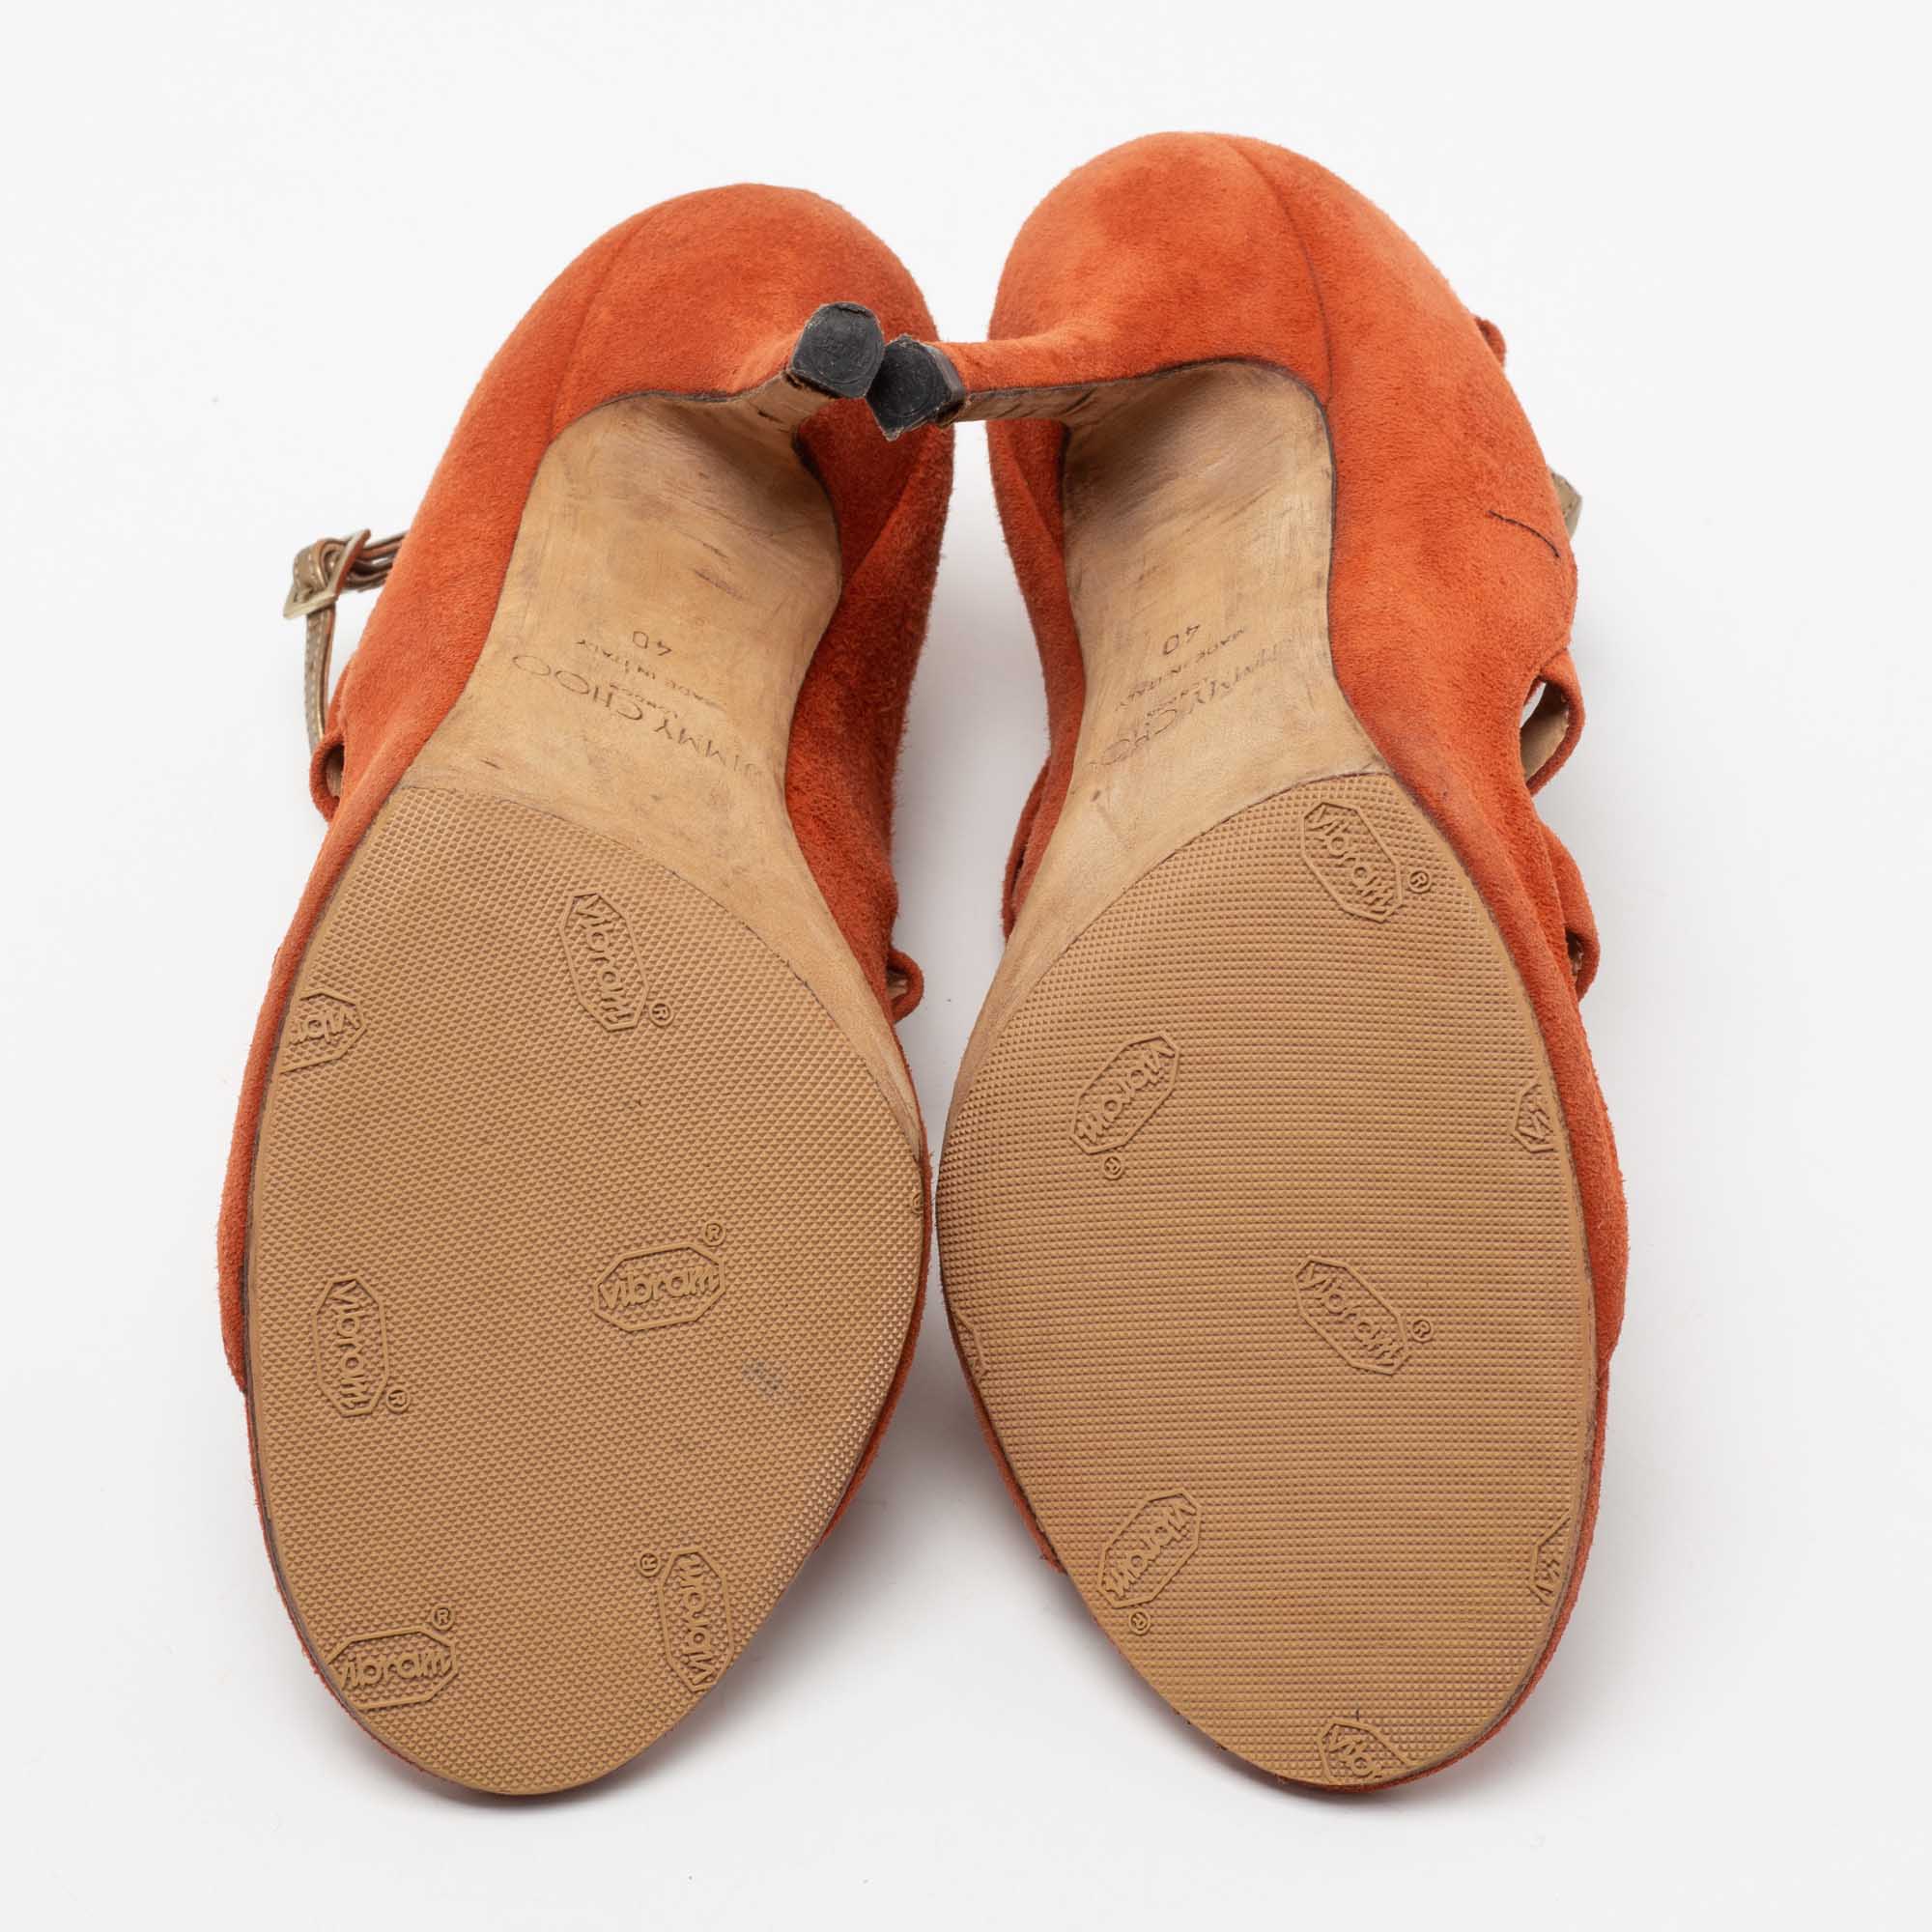 Jimmy Choo Orange Suede Fathom Strappy Cage Sandals Size 40